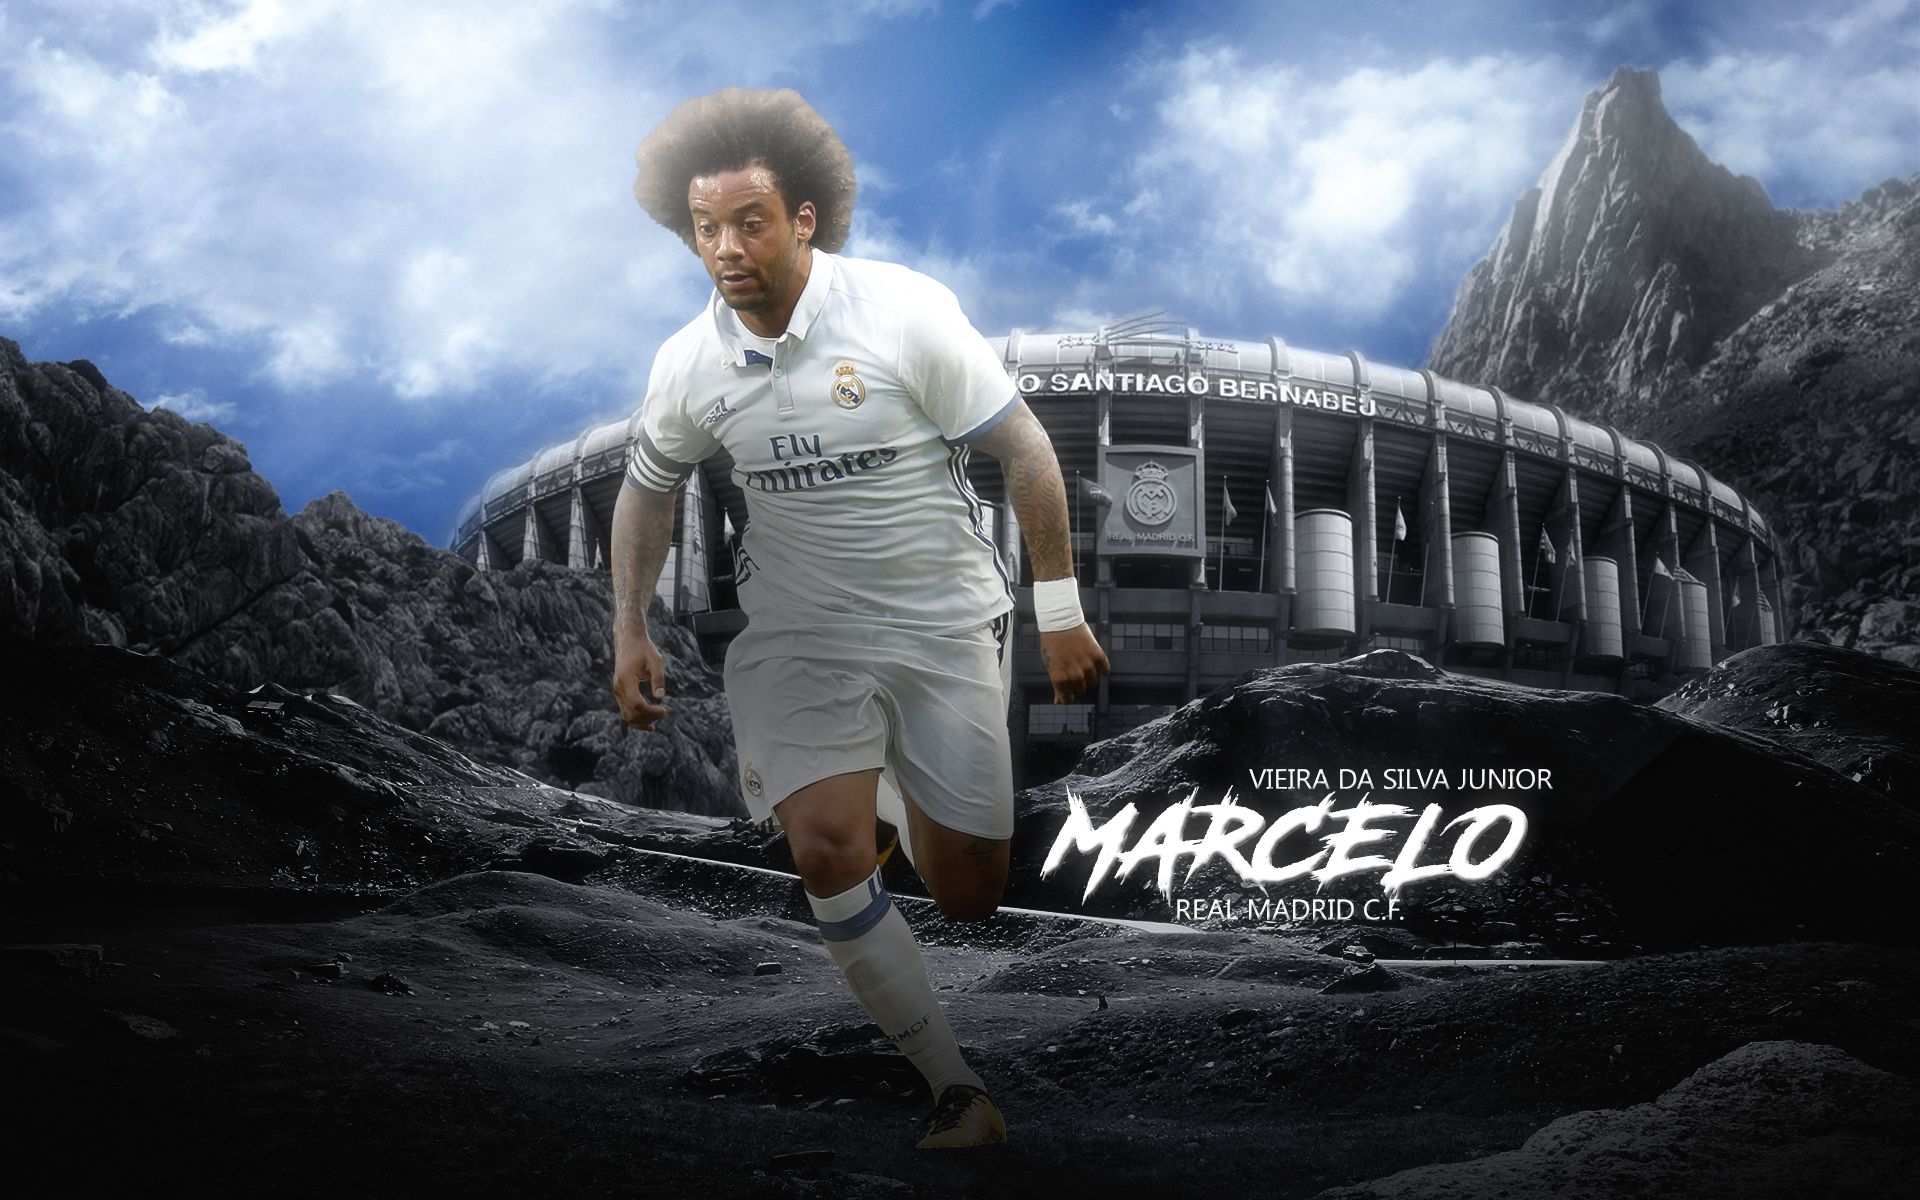 Descarga gratuita de fondo de pantalla para móvil de Fútbol, Deporte, Real Madrid C F, Marcelo Vieira.